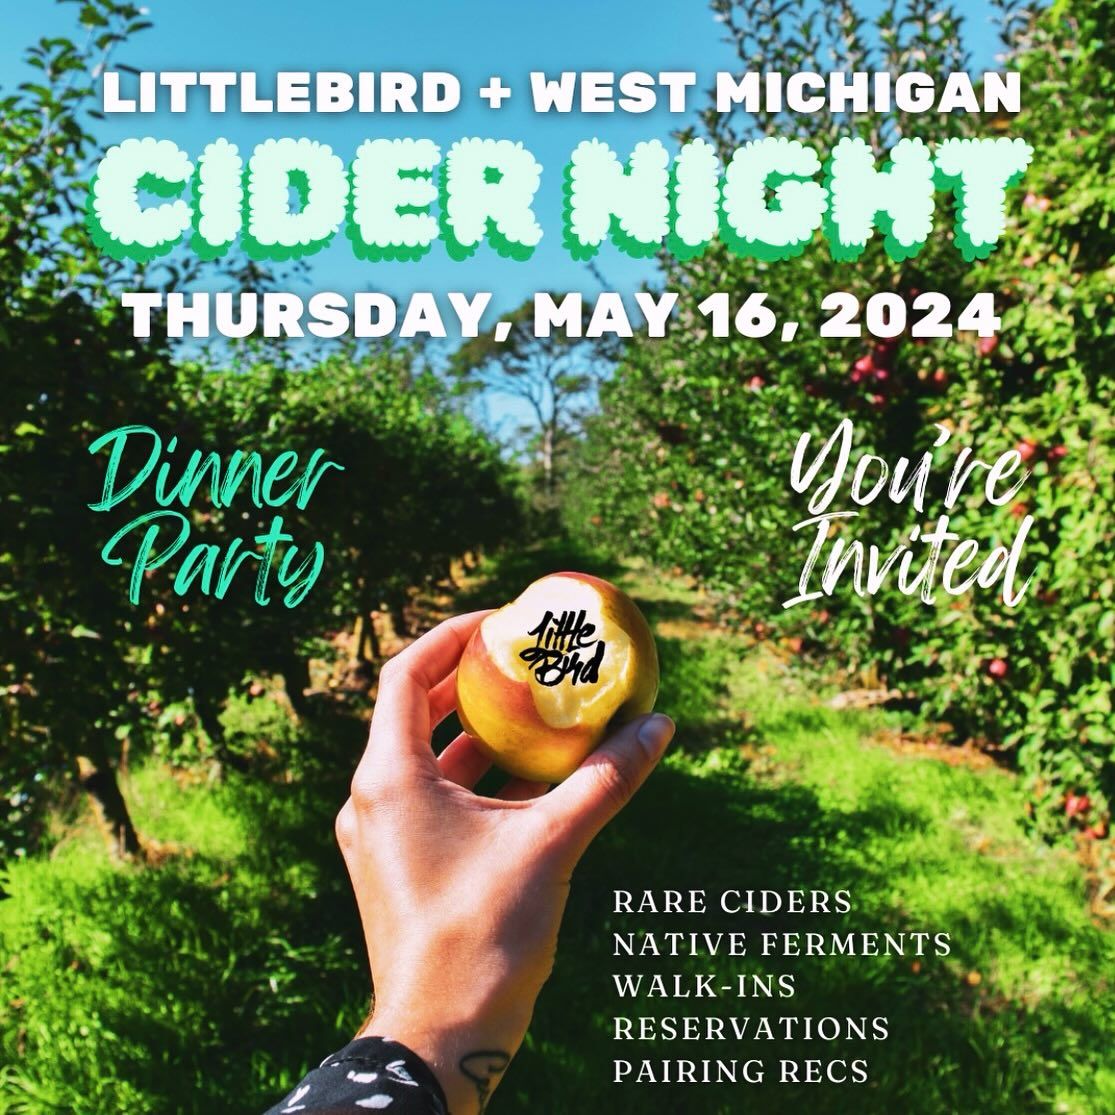 West Michigan Cider Night at Littlebird!